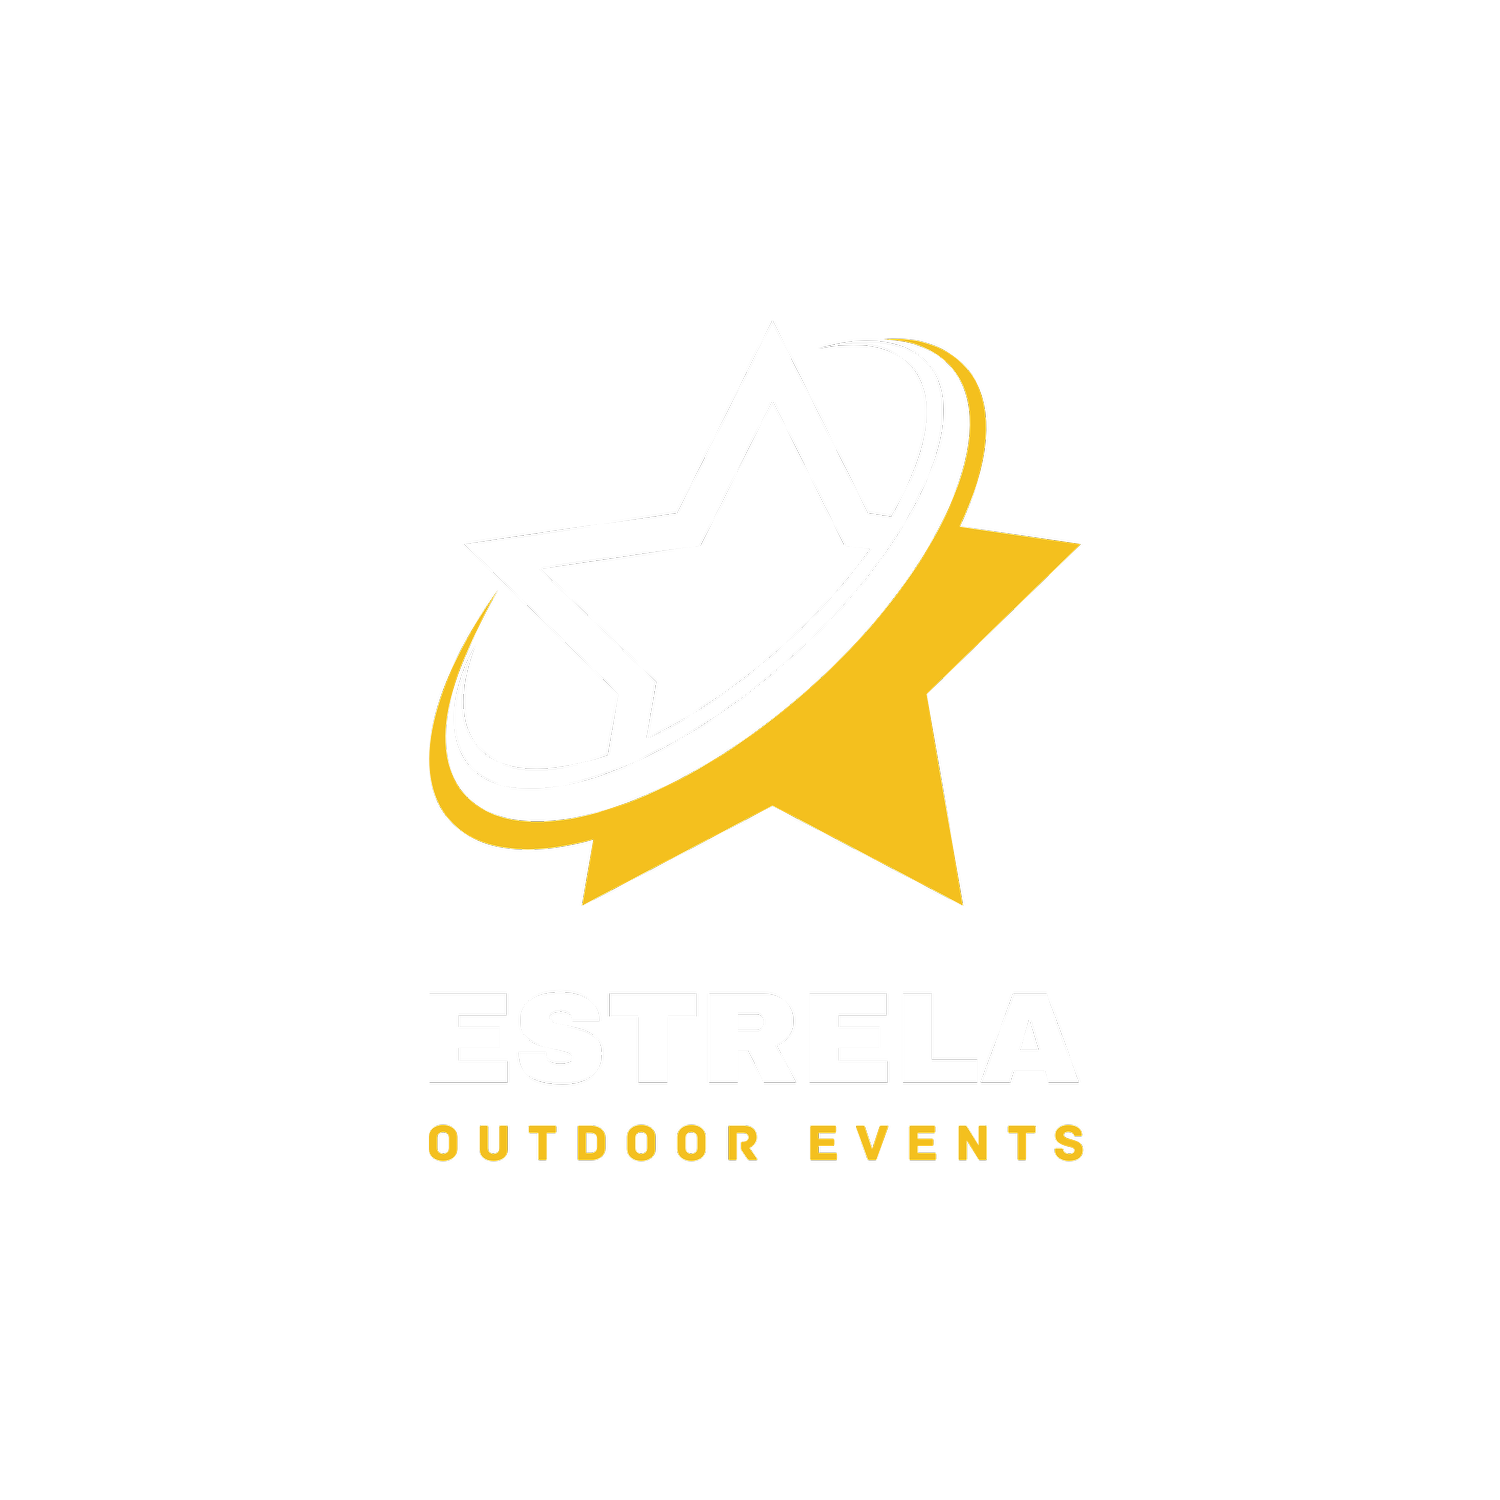 ESTRELA OUTDOOR EVENTS